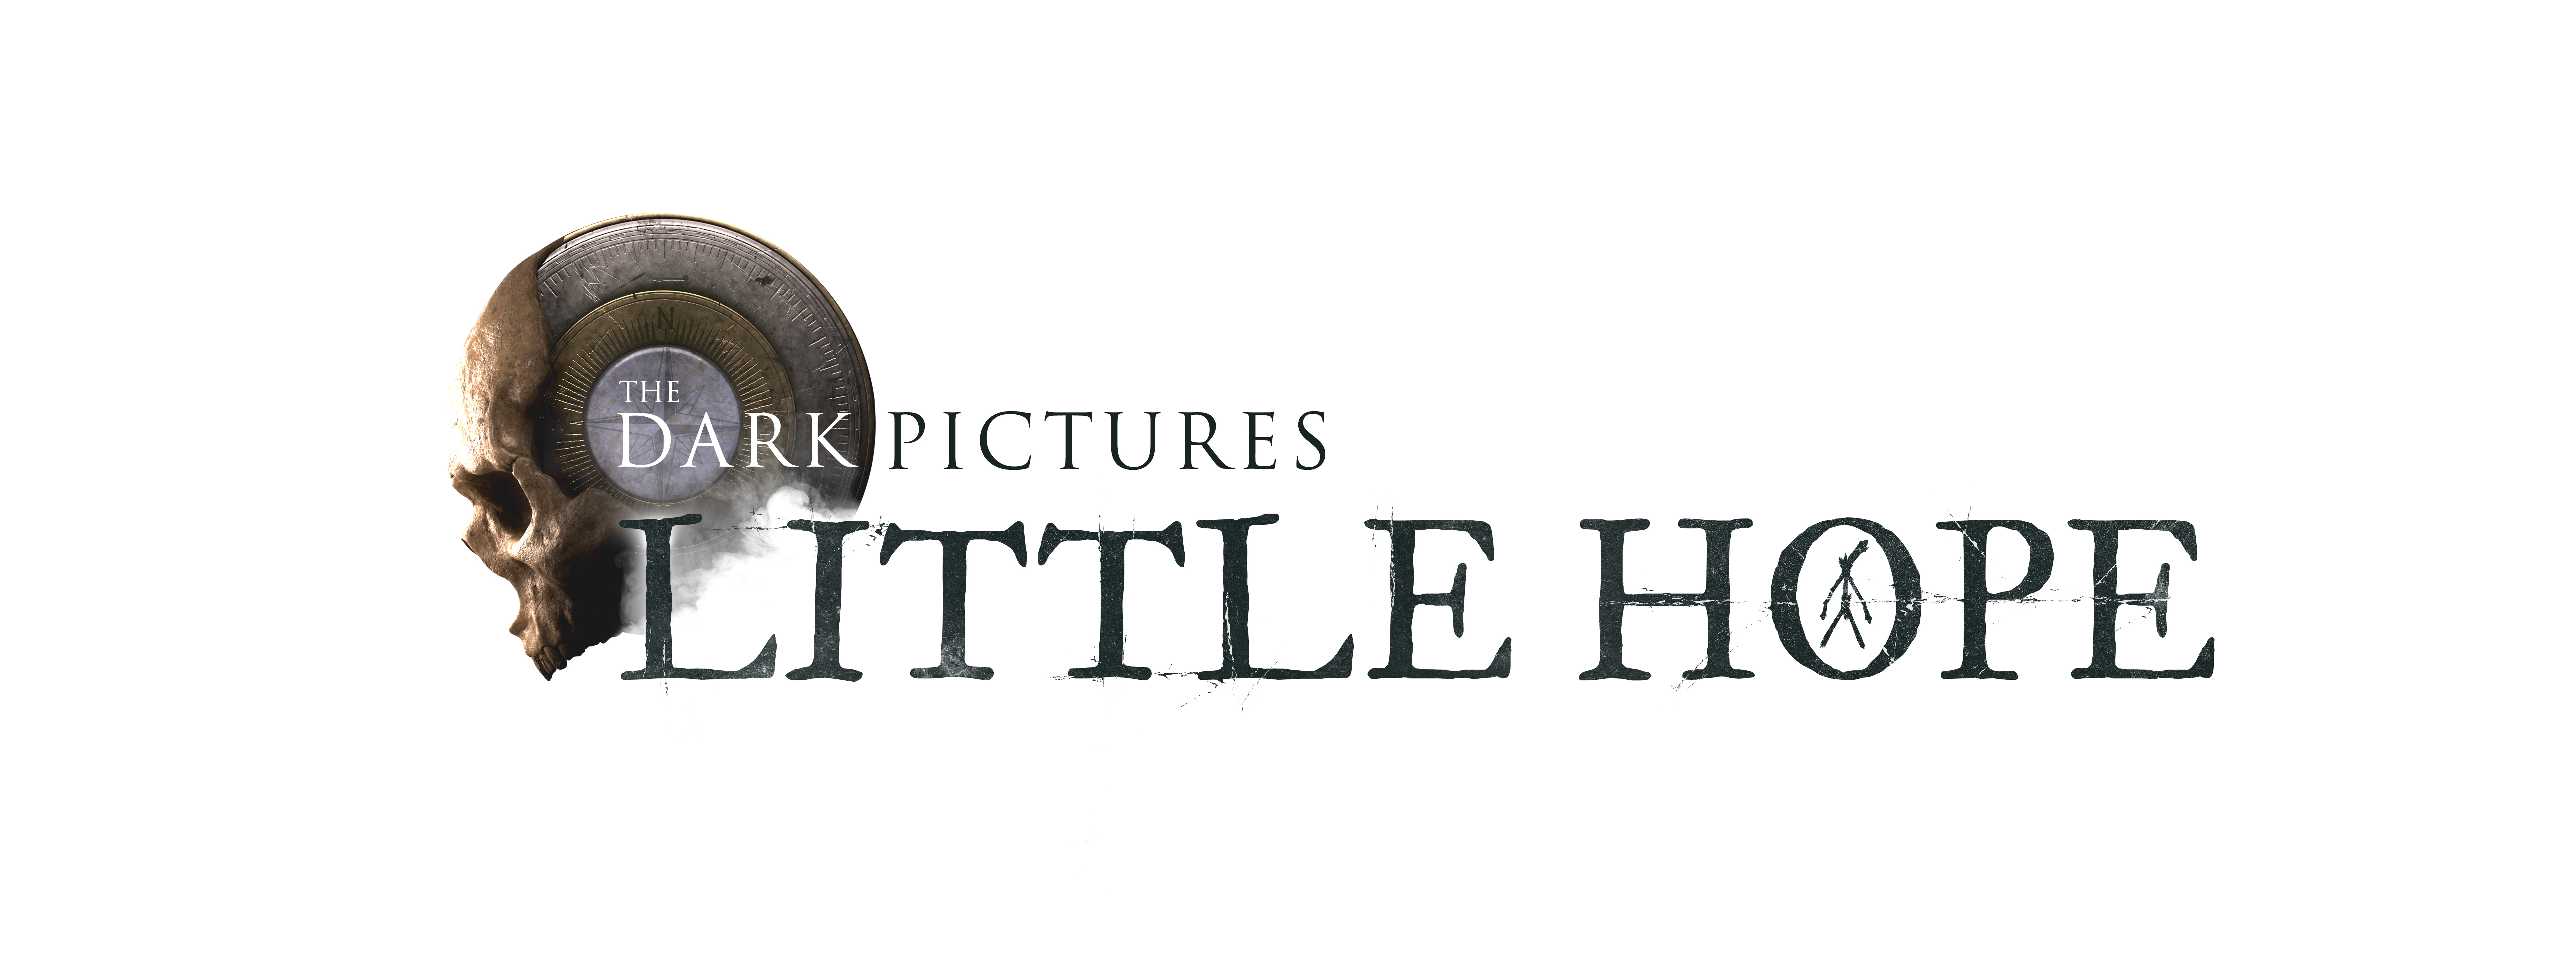 The Dark Pictures Anthology: Little Hope erscheint am 30. Oktober